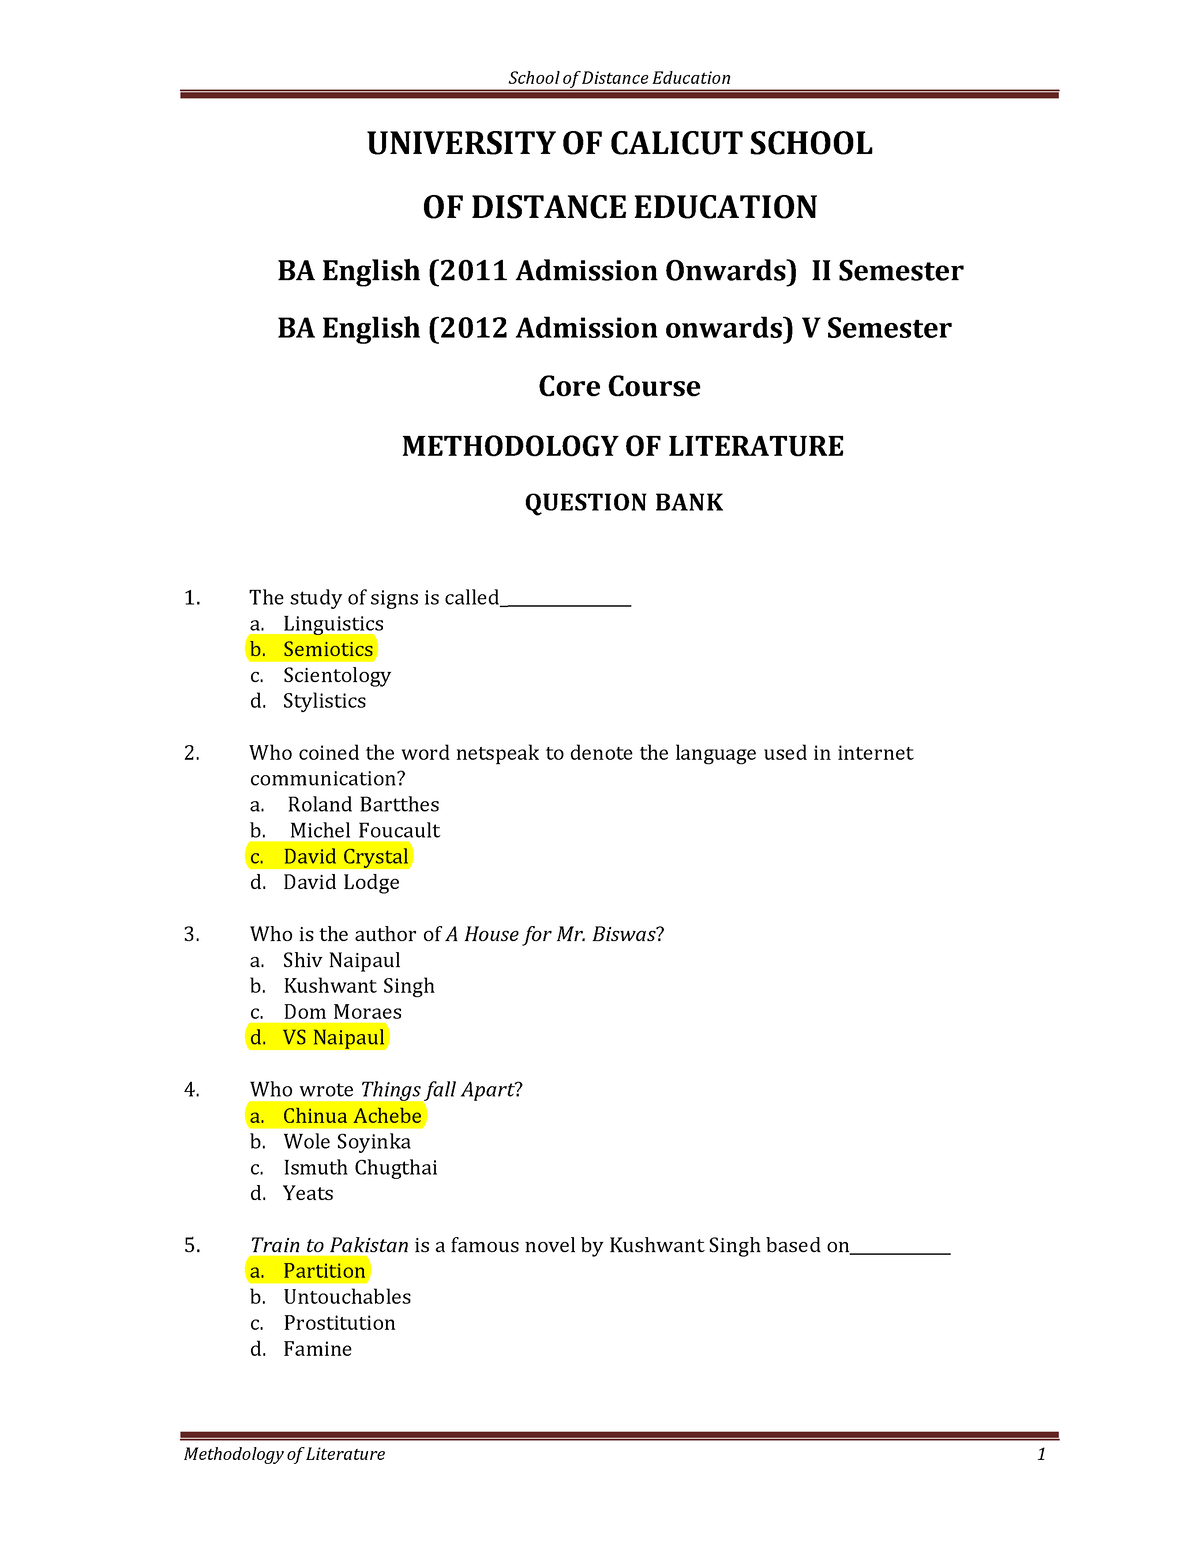 methodology of literature calicut university pdf